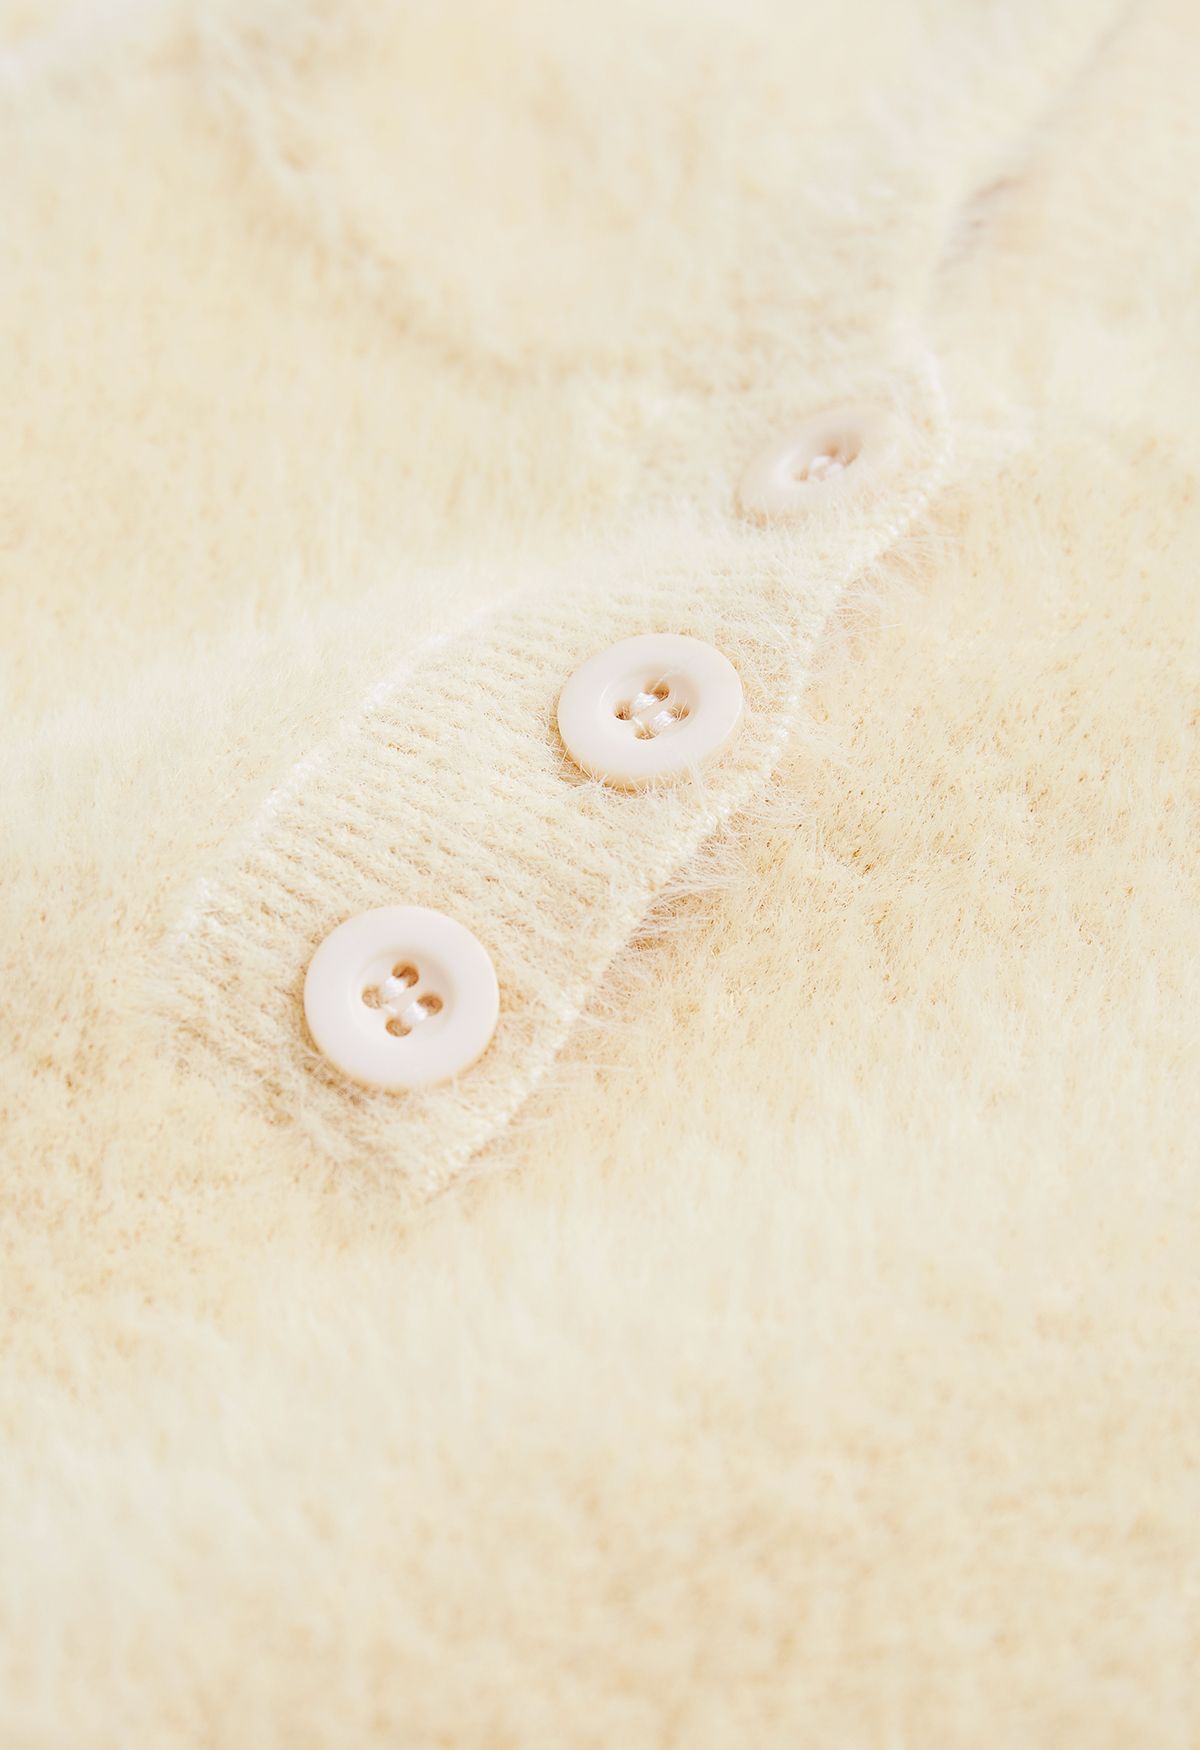 Suéter con capucha Lovely Bunny Fuzzy Knit en crema para niños